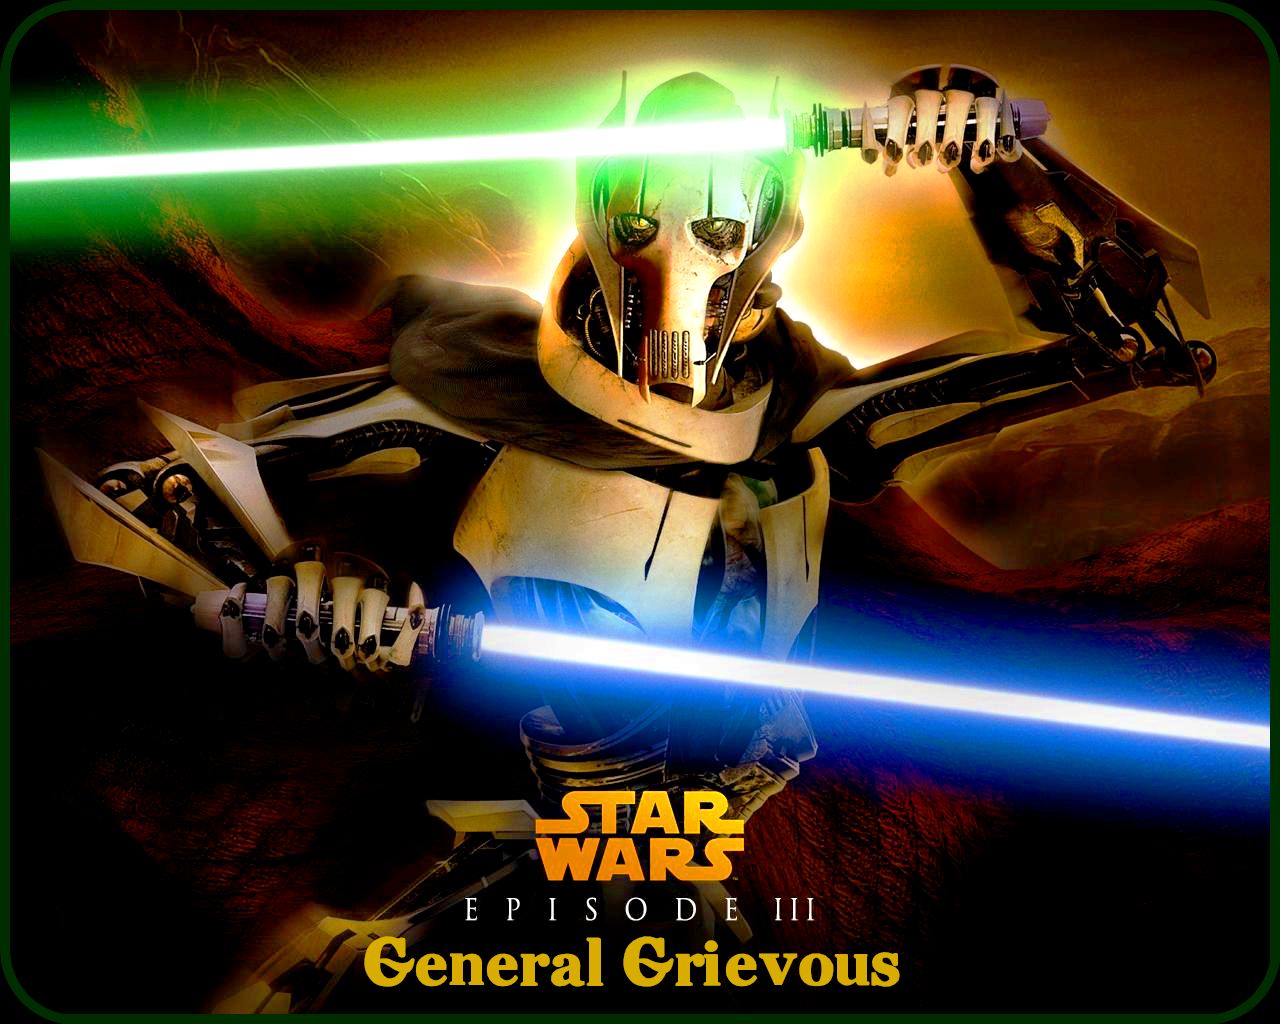 general grievous, movie, star wars episode iii: revenge of the sith, blue lightsaber, green lightsaber, lightsaber, star wars